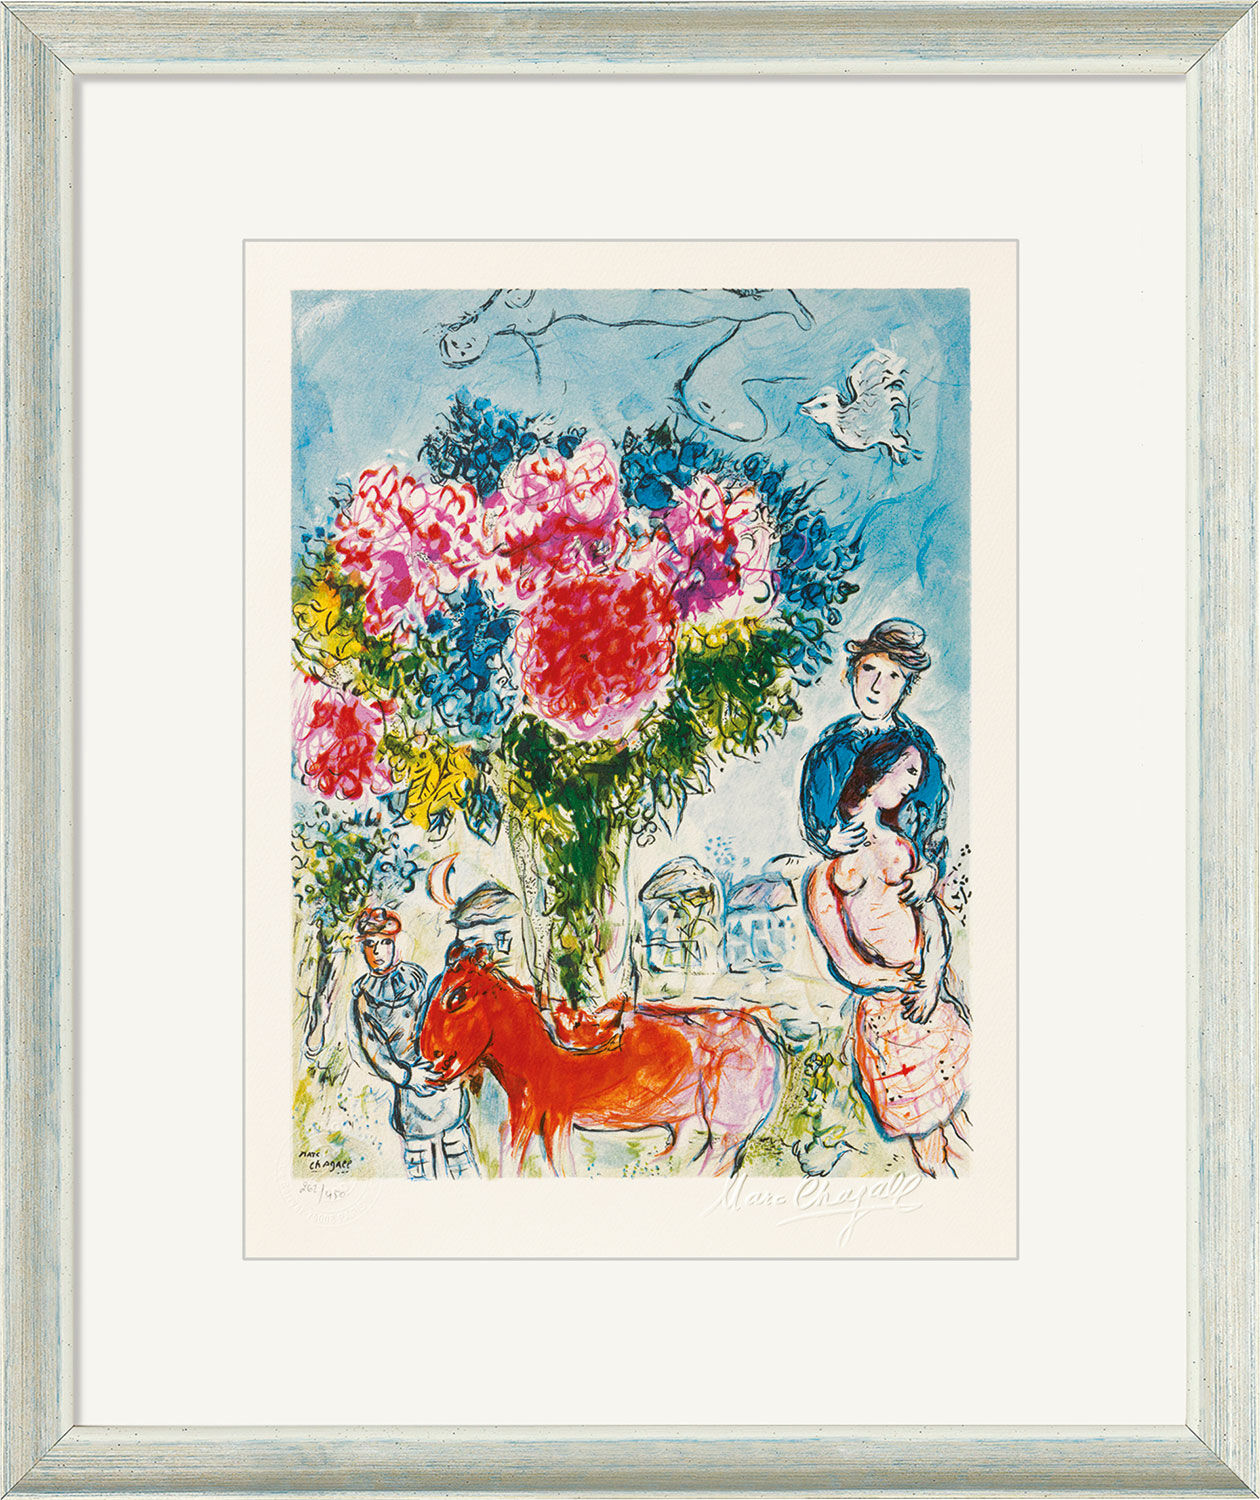 Beeld "Personnages fantastiques" (1974), ingelijst von Marc Chagall